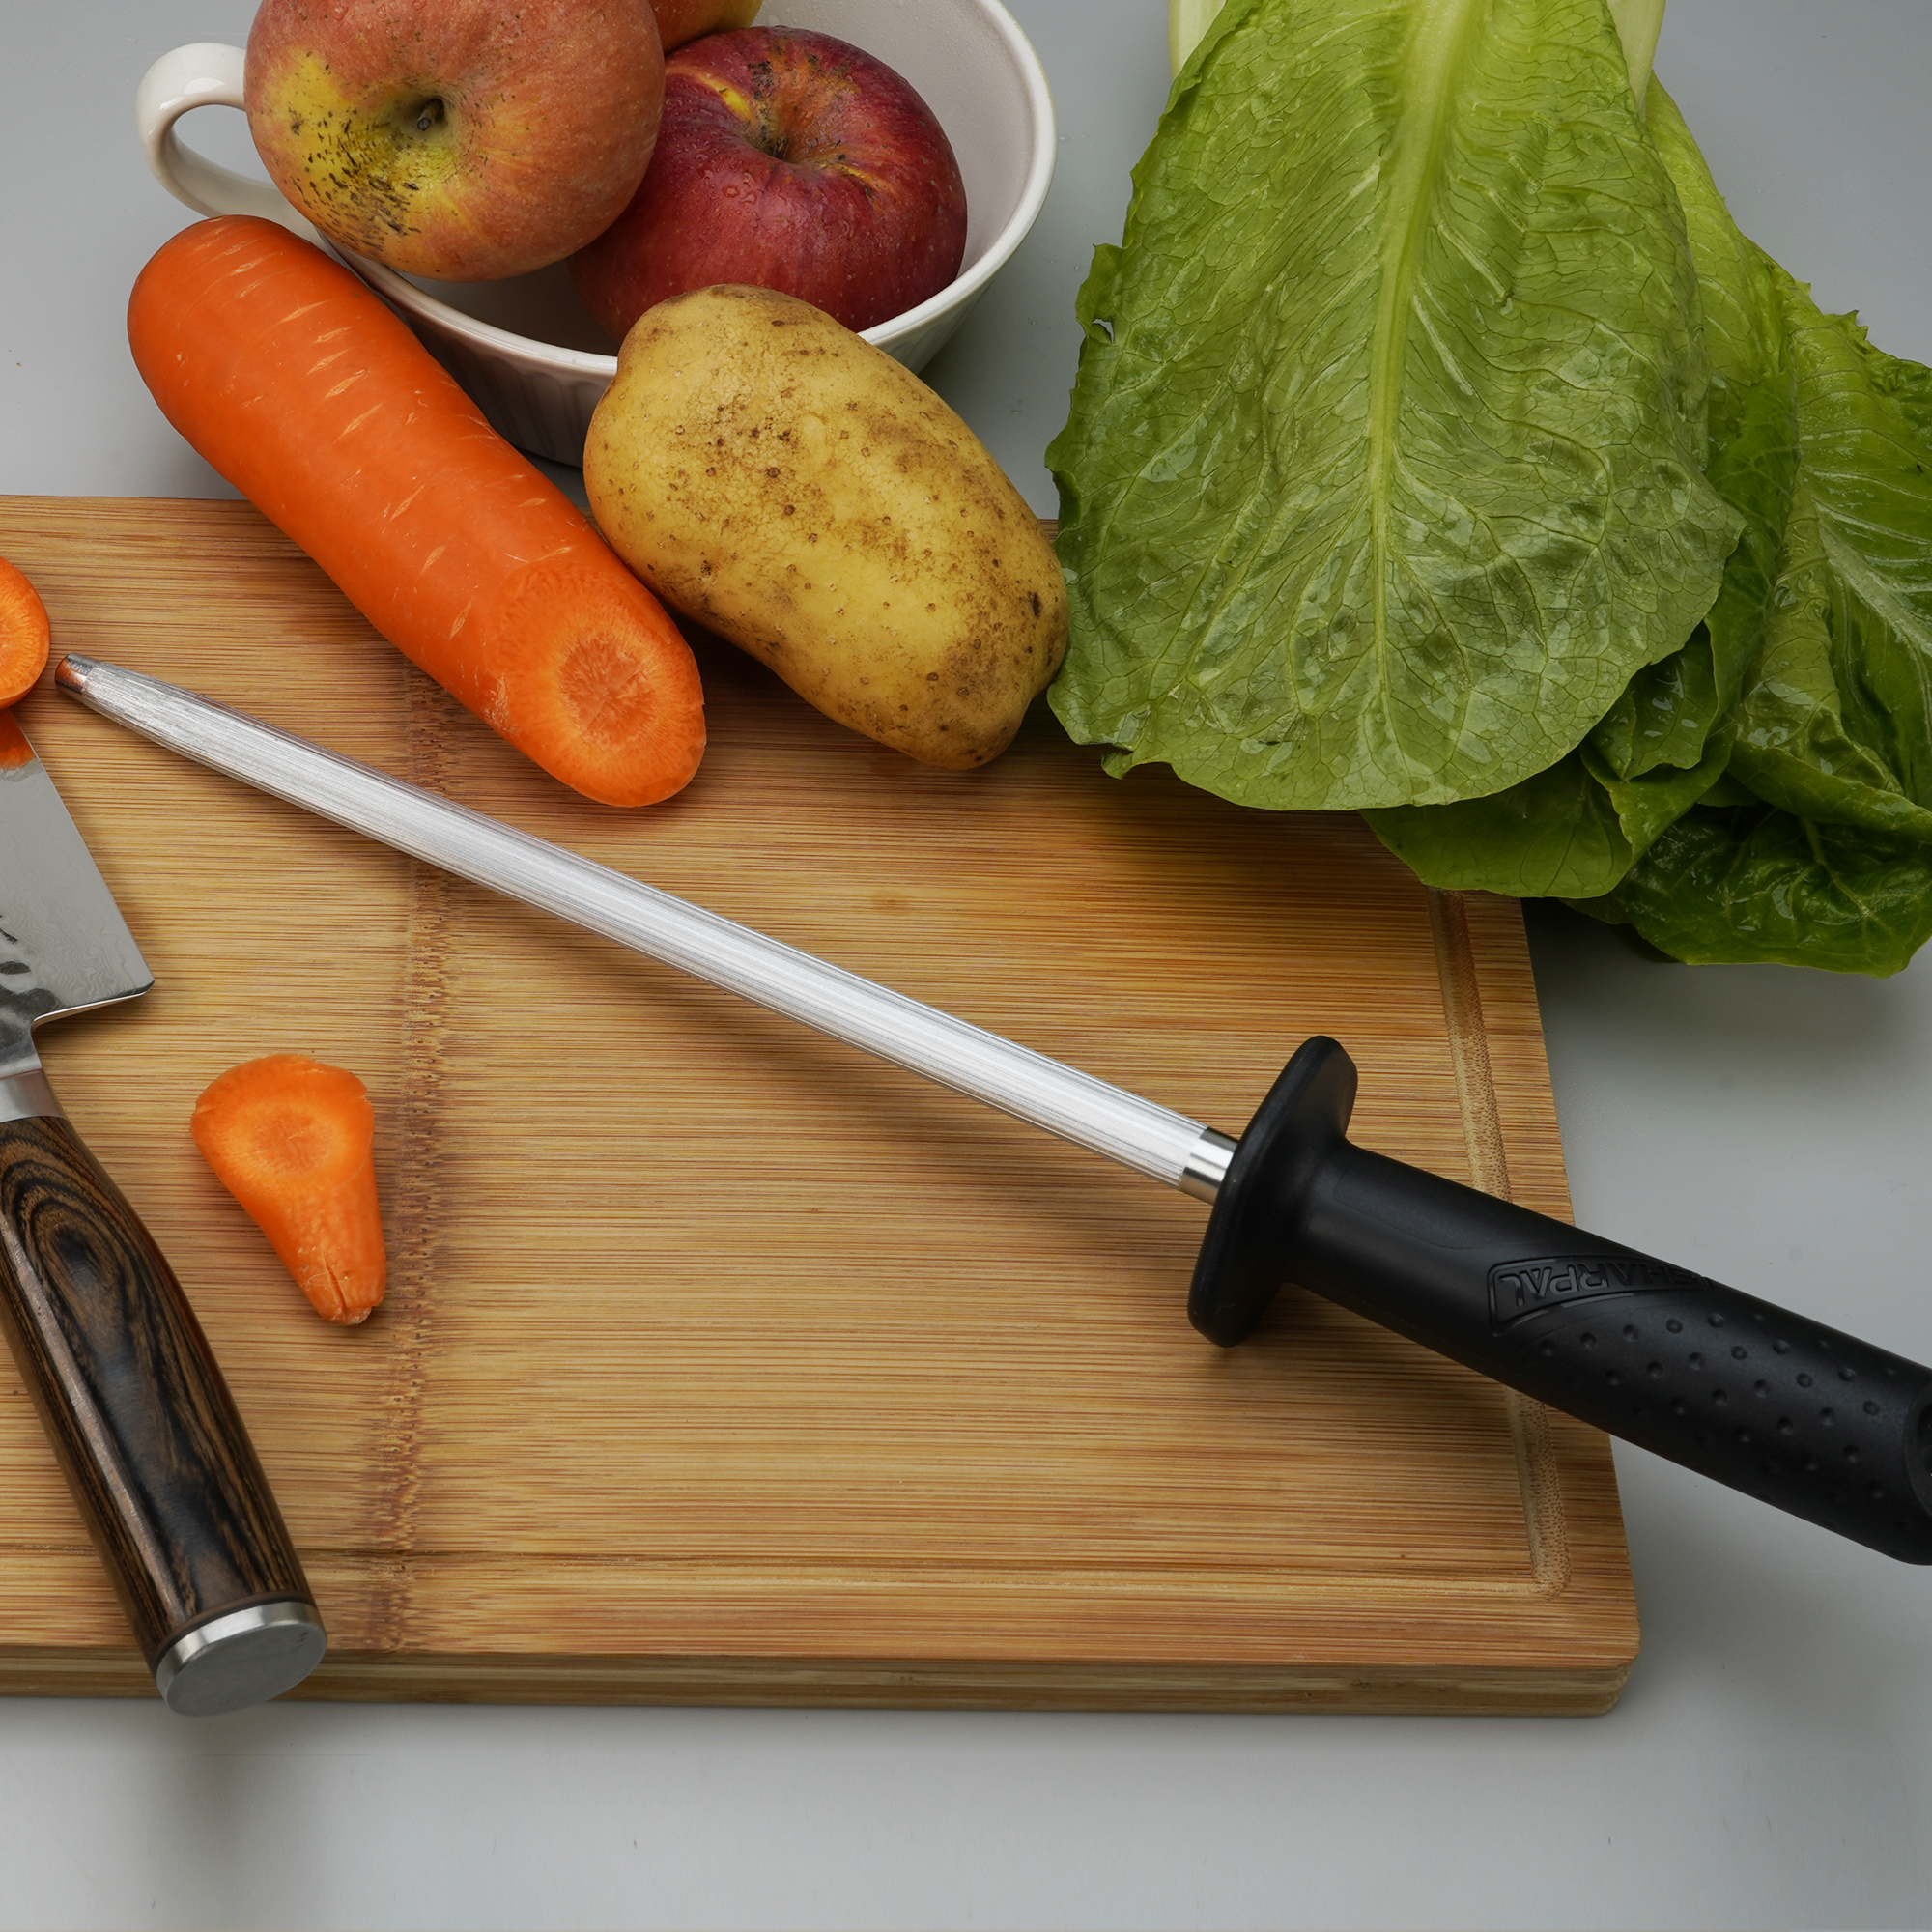 Kitchen Knife Sharpener With Suction Cup Positioning Knife Grinder